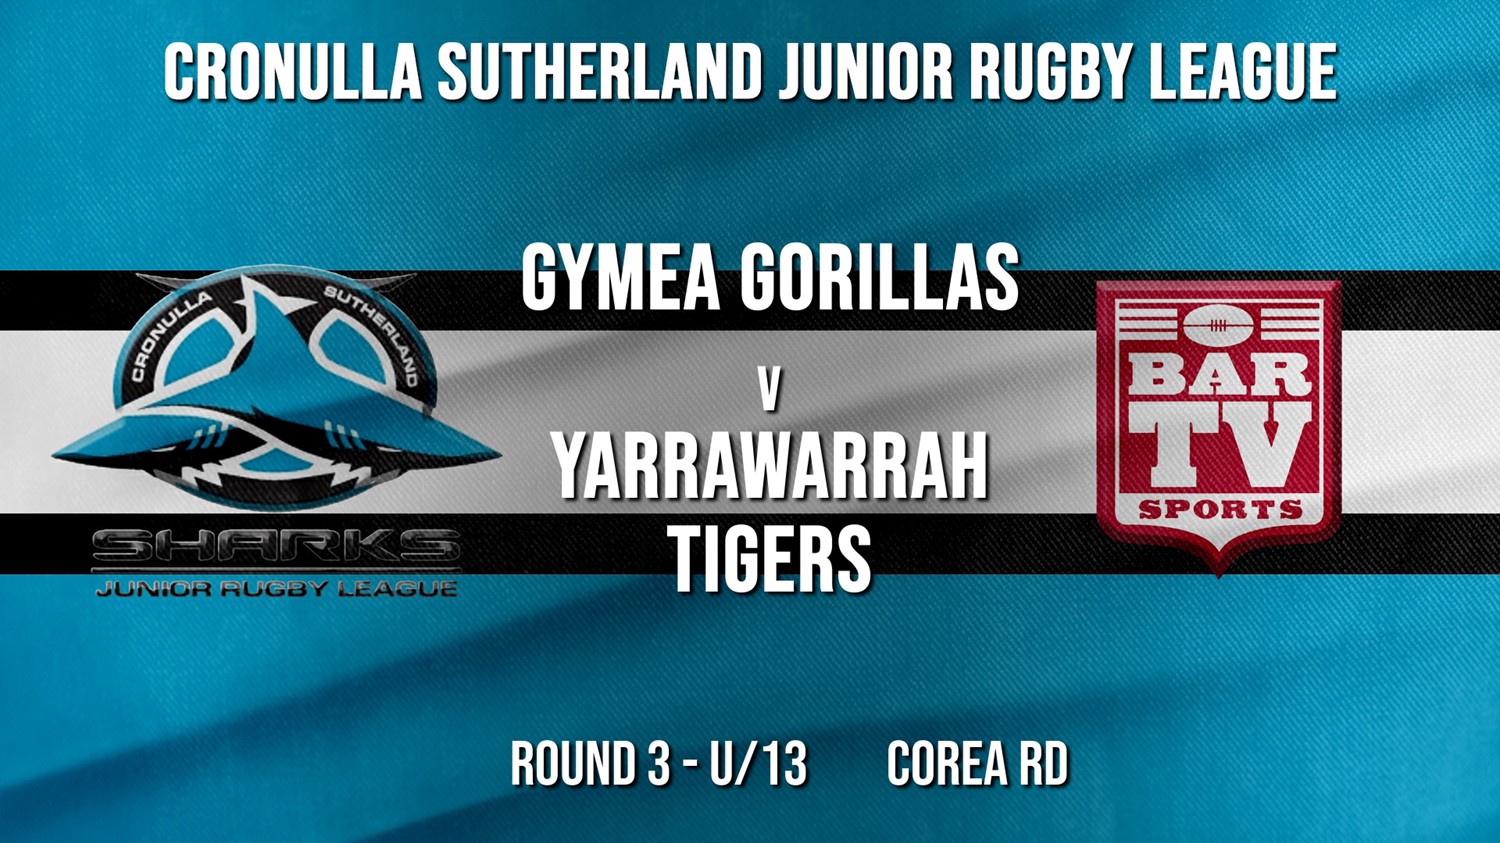 Cronulla JRL Round 3 - U/13 - Gymea Gorillas v Yarrawarrah Tigers Minigame Slate Image